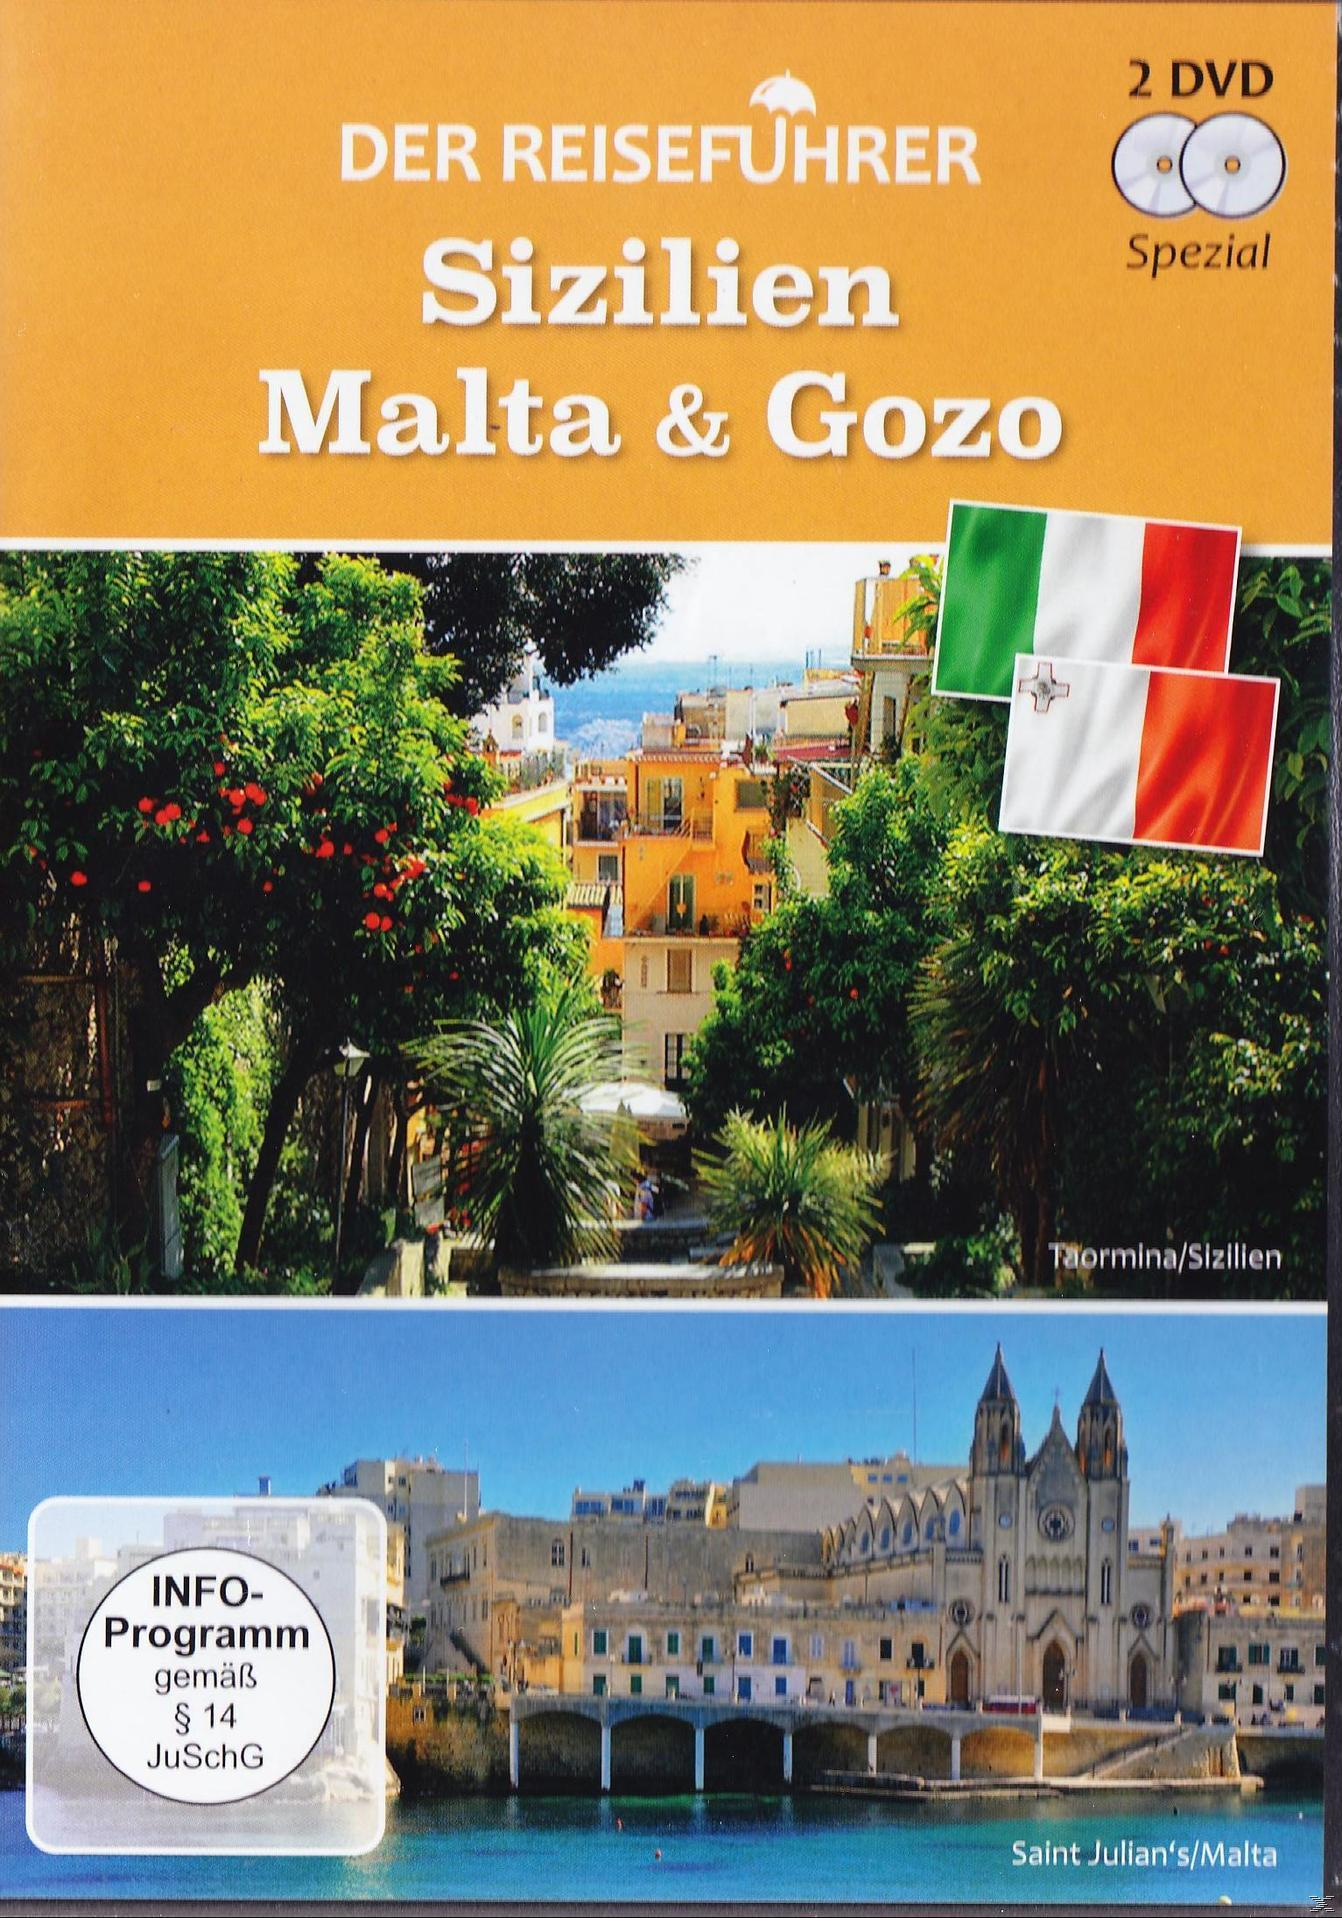 - Reiseführer & Malta Der Gozo DVD Sizilien,